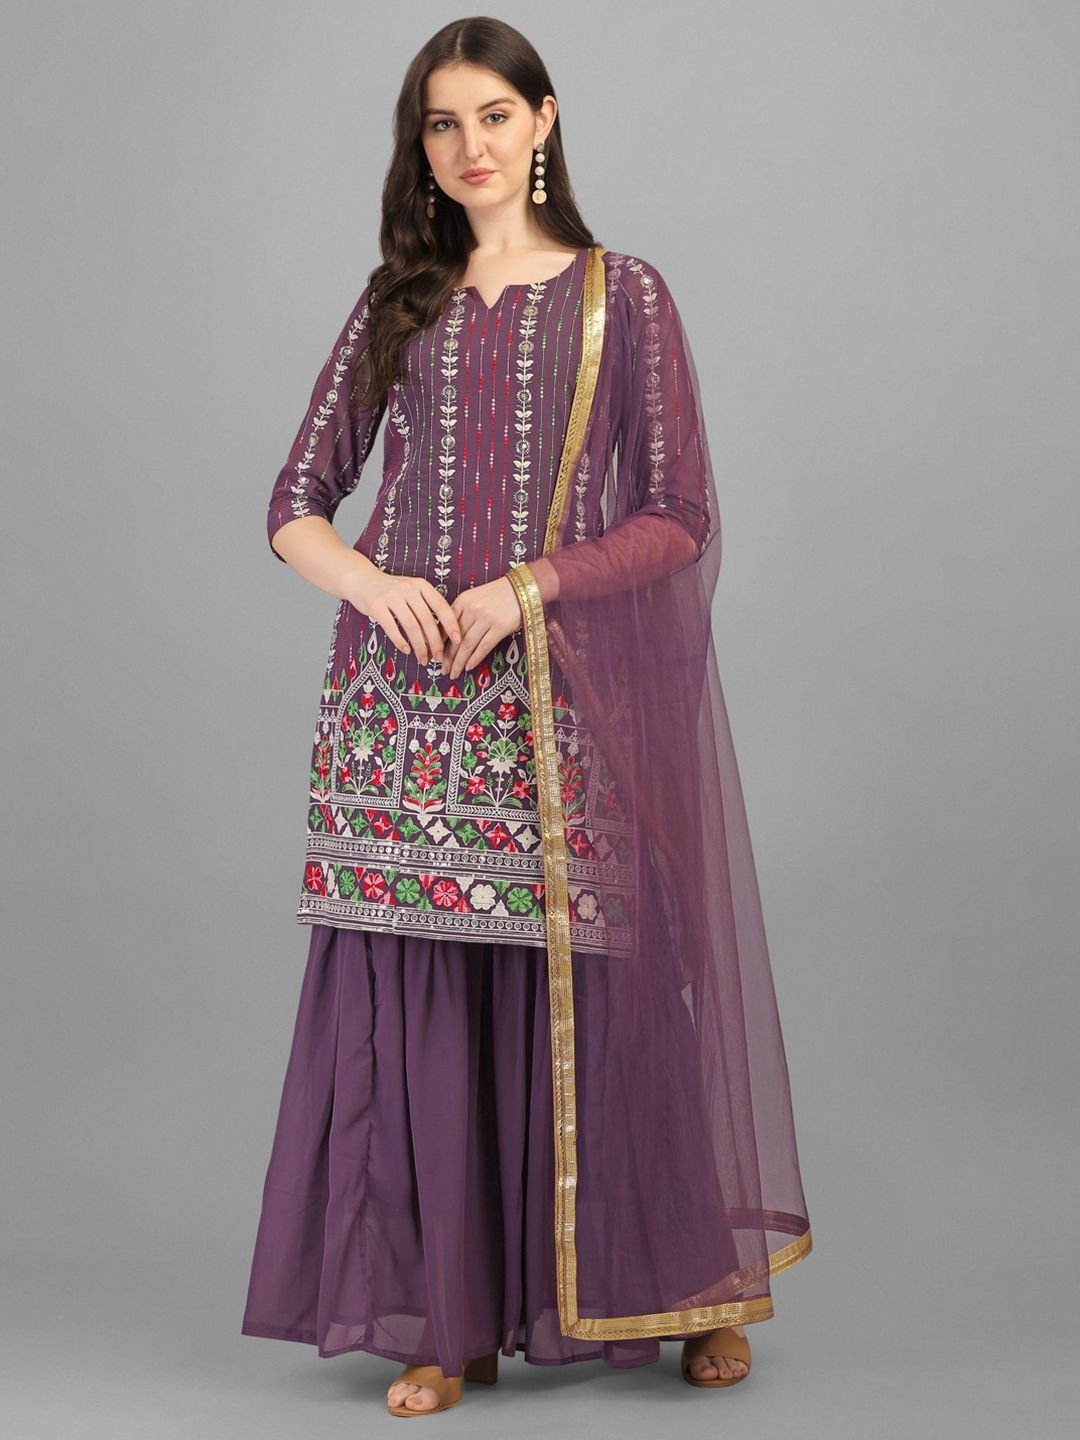 JATRIQQ Lavender & Gold-Toned Embroidered Silk Georgette Semi-Stitched Dress Material Price in India